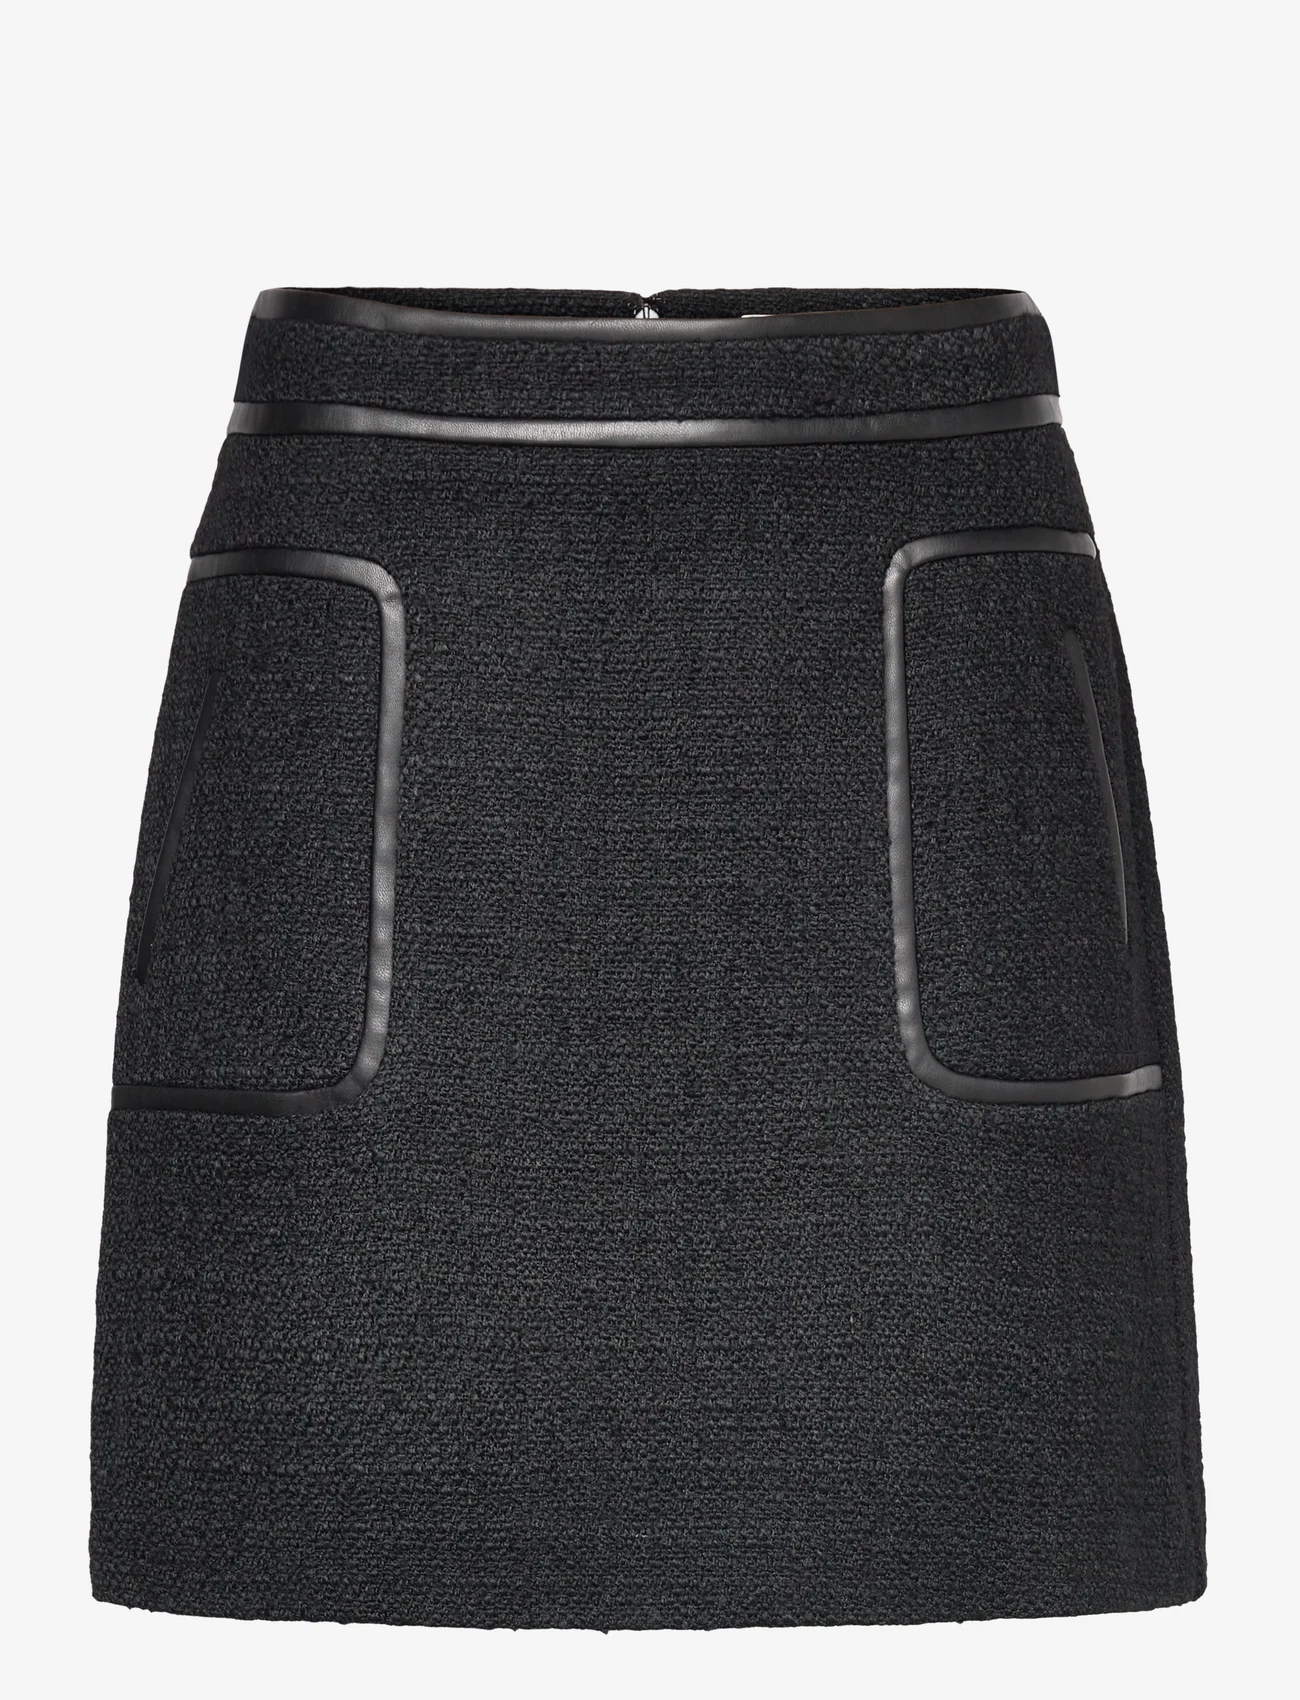 Malina - Paige boucle wool blend mini skirt - kort skjørt - black - 0